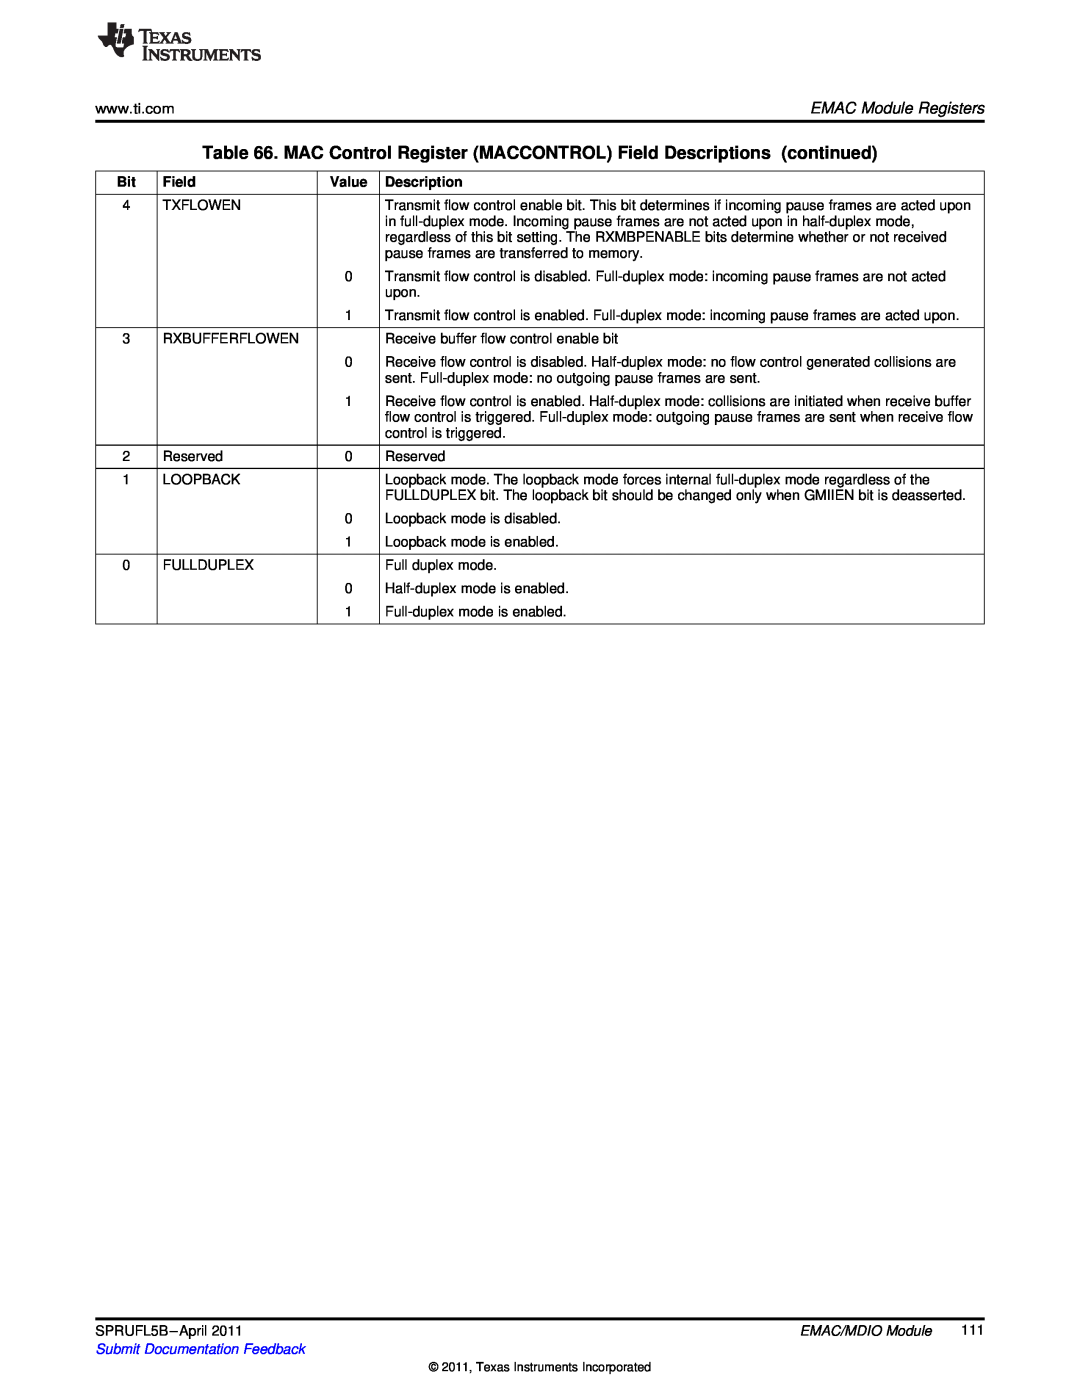 Texas Instruments TMS320C674X manual Field, Value, Description, Submit Documentation Feedback 